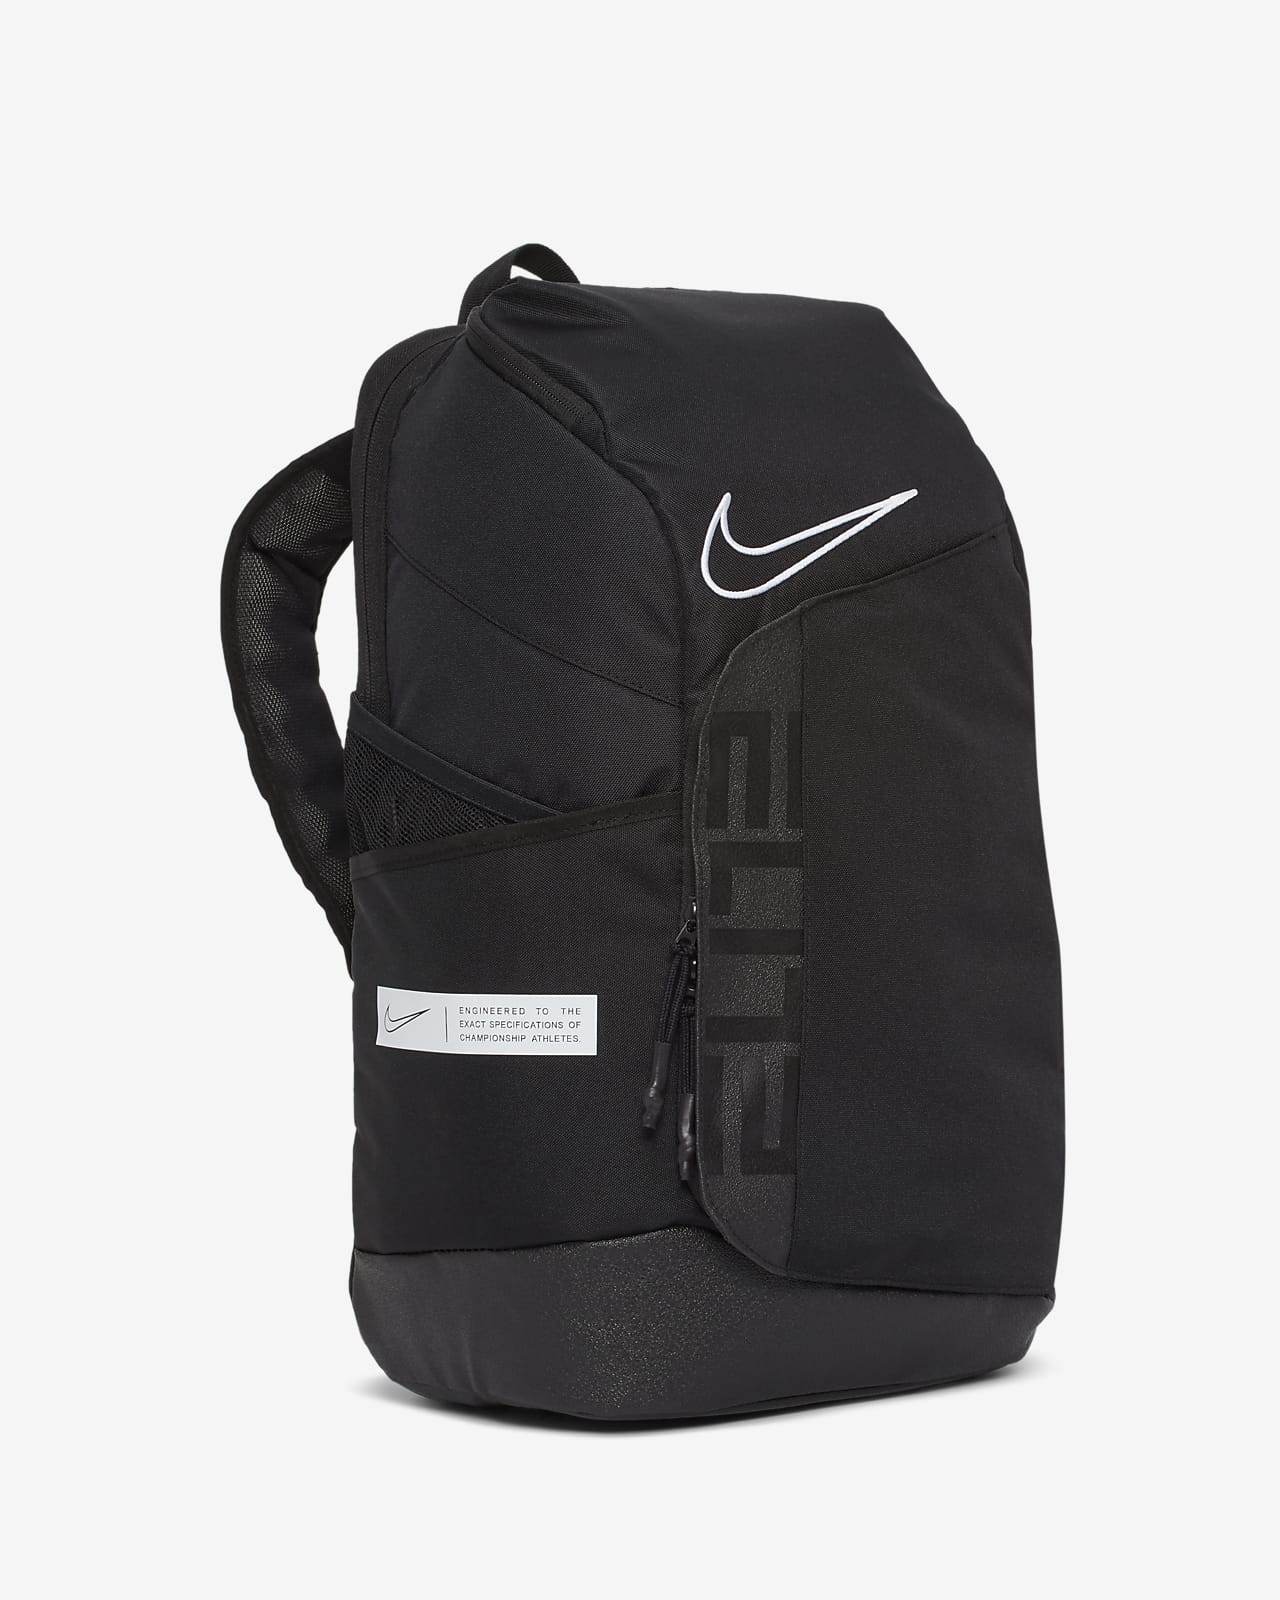 new nike elite bag